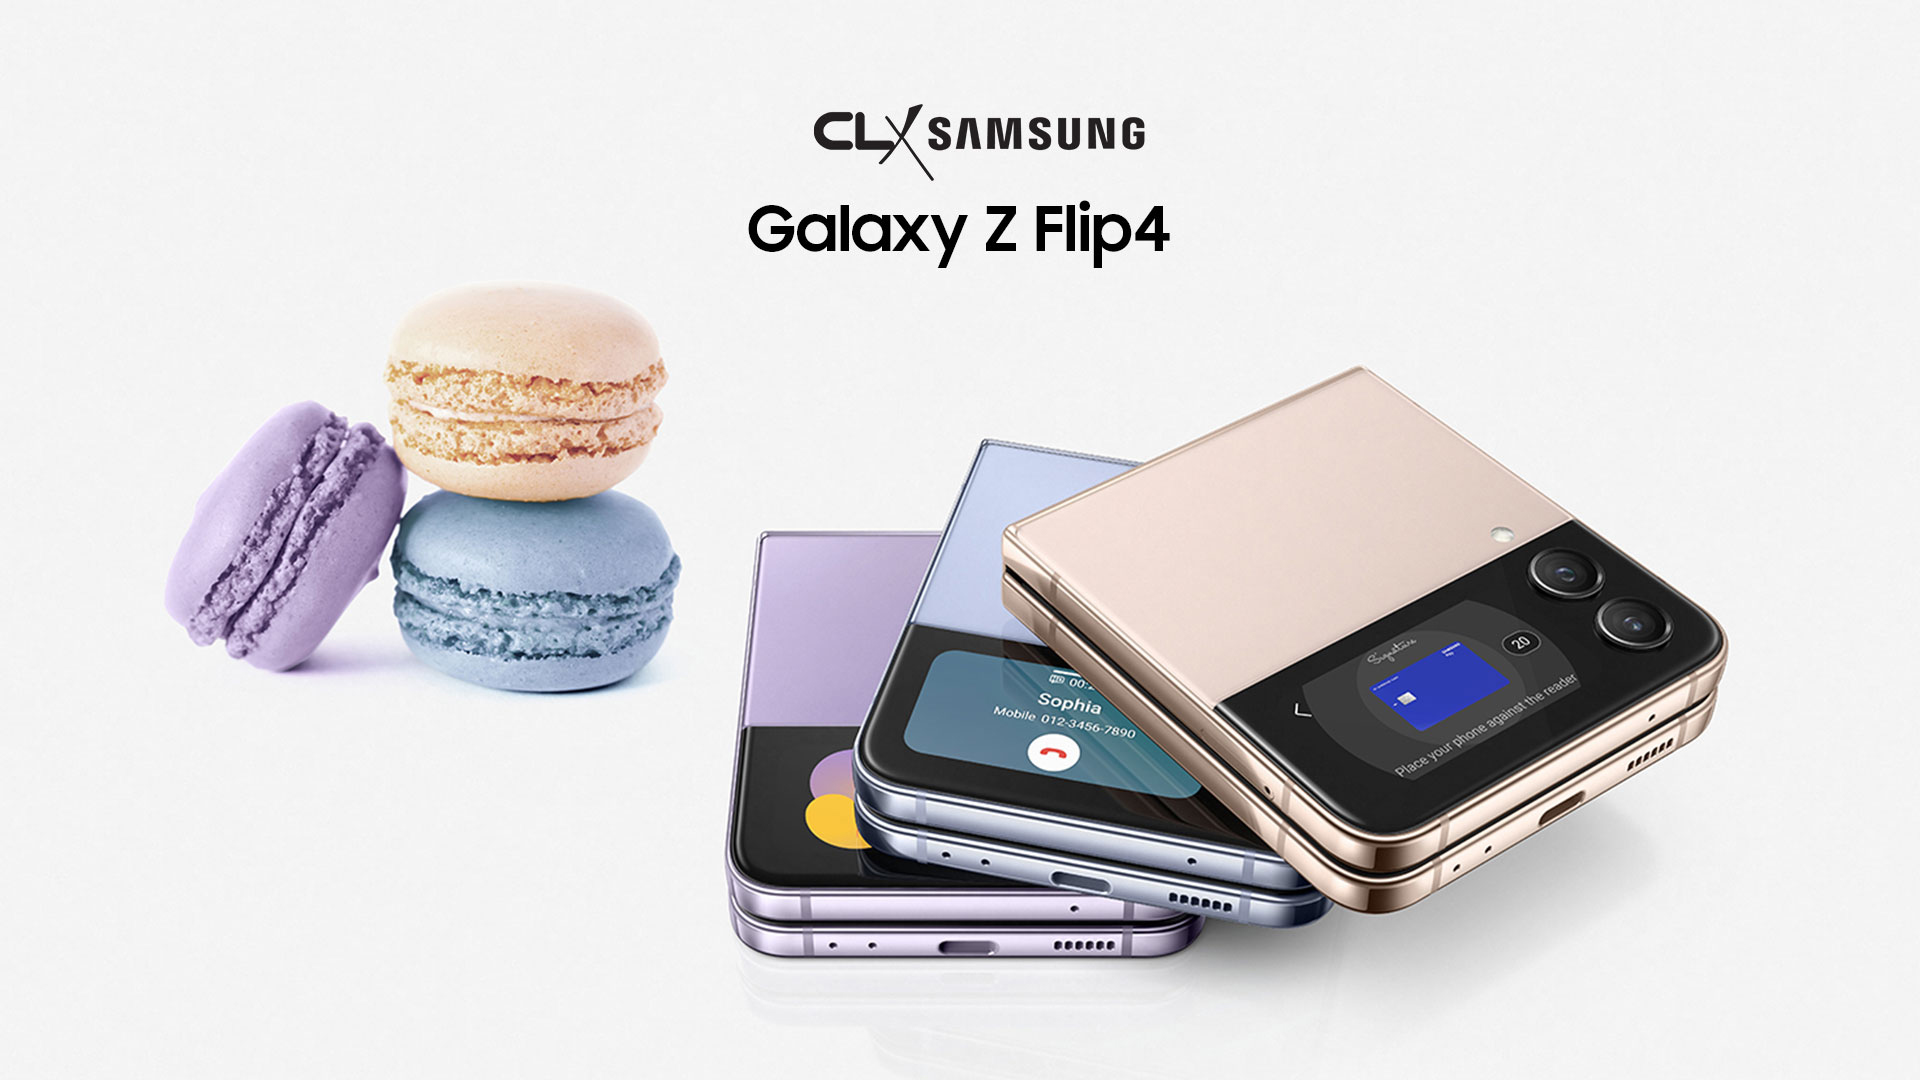 Samsung CLX Galaxy Z Flip4